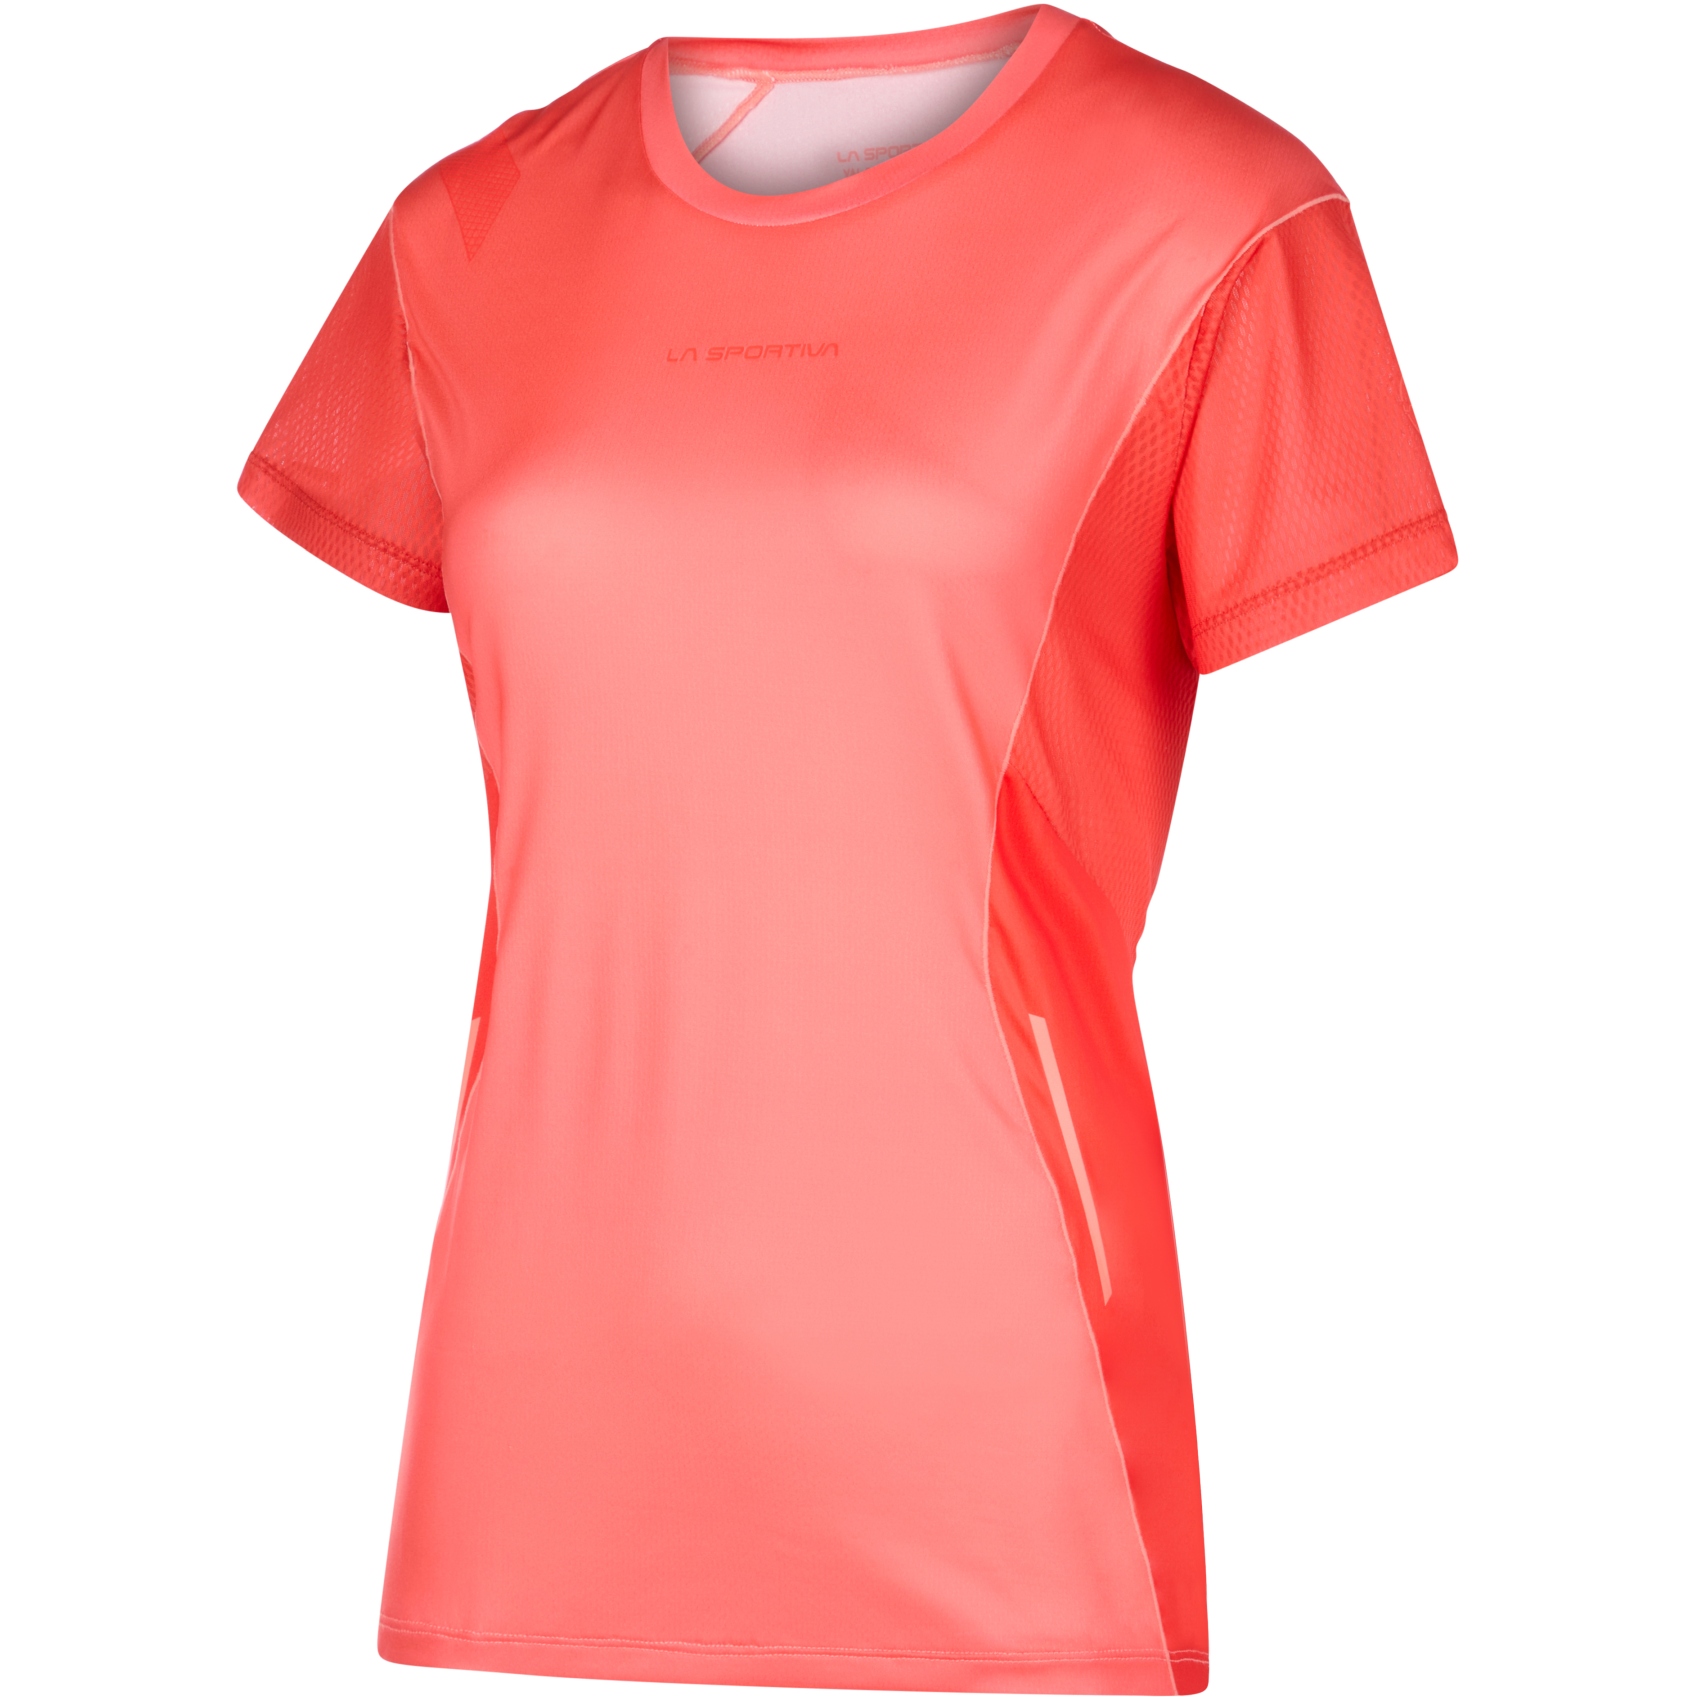 Productfoto van La Sportiva Resolute T-Shirt Dames - Flamingo/Cherry Tomato